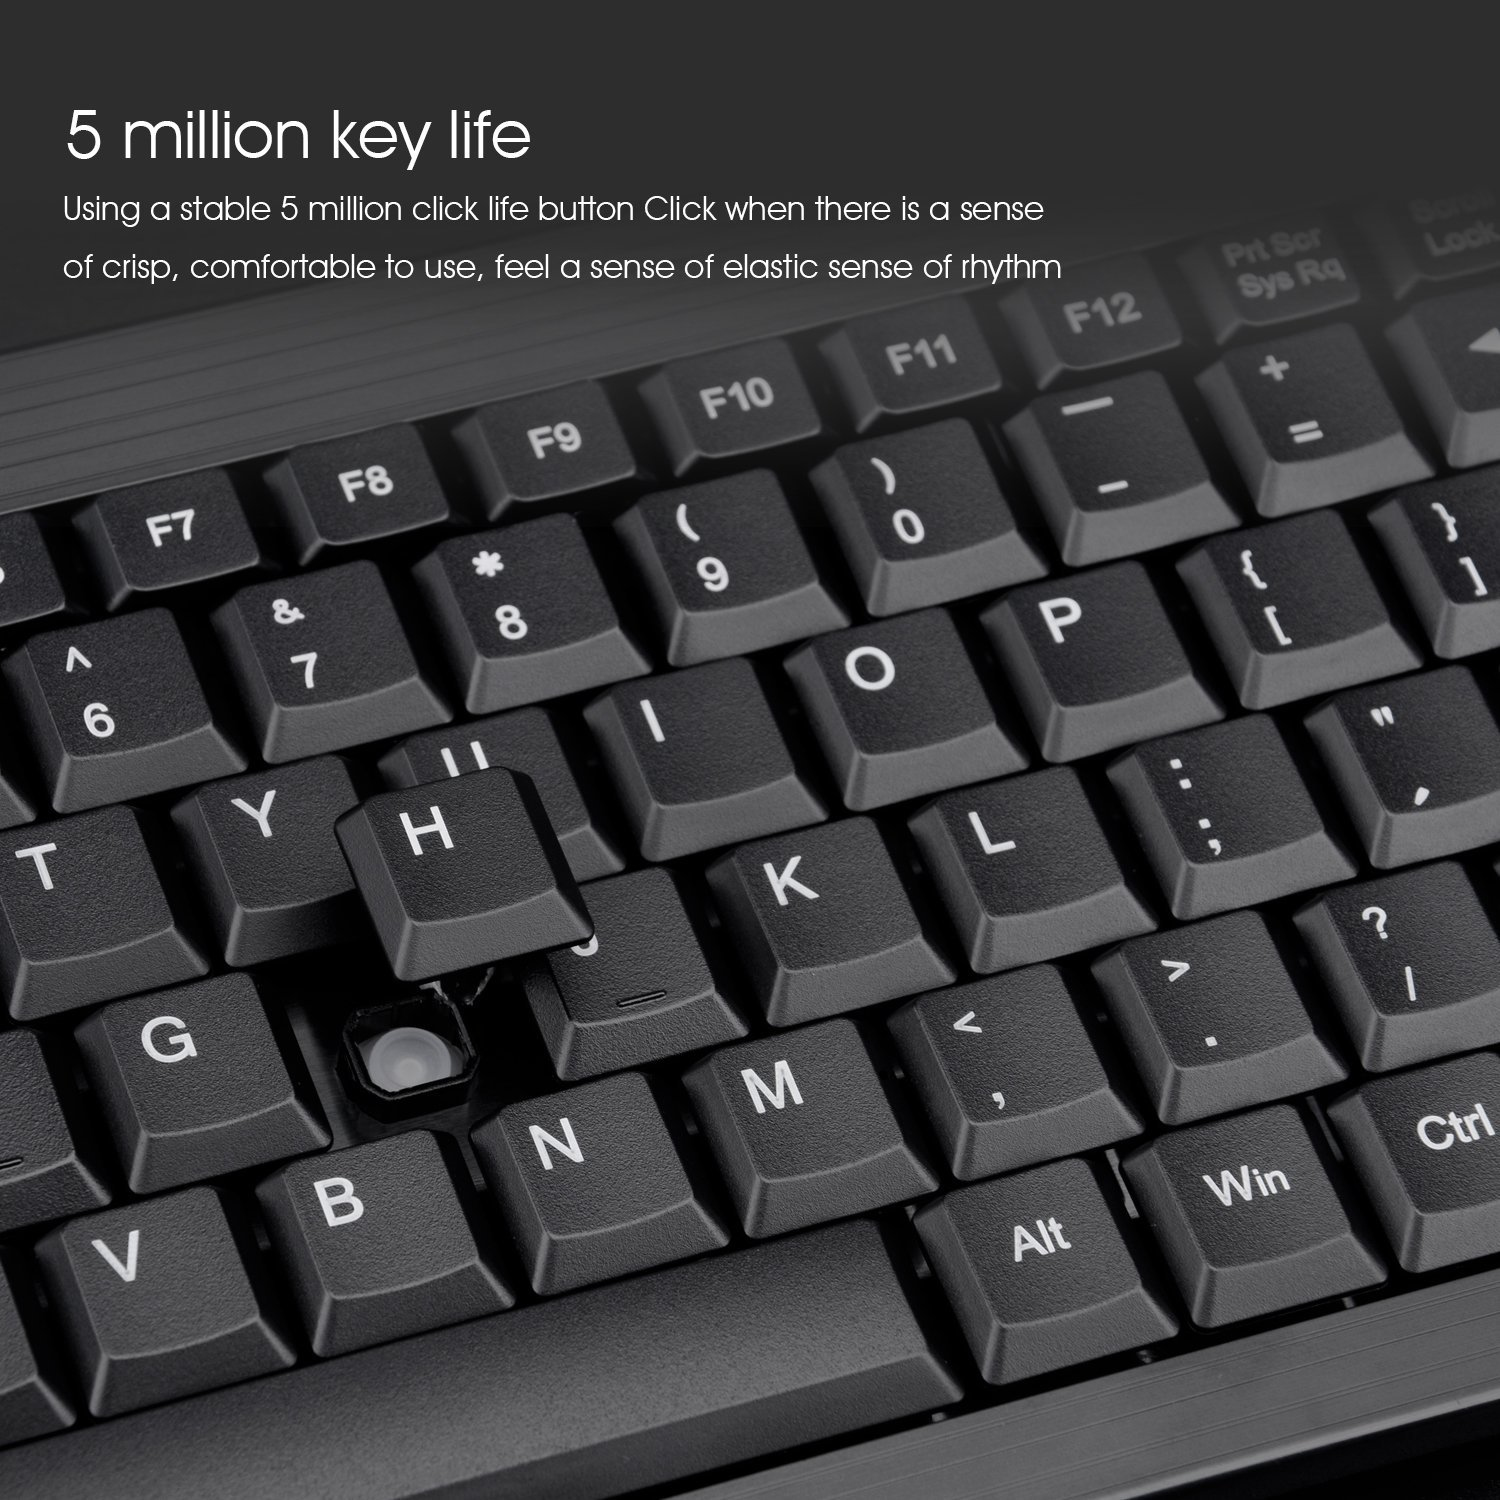 Rii RK901 ultra-slim Compact full Size 2.4G Wireless Keyboard